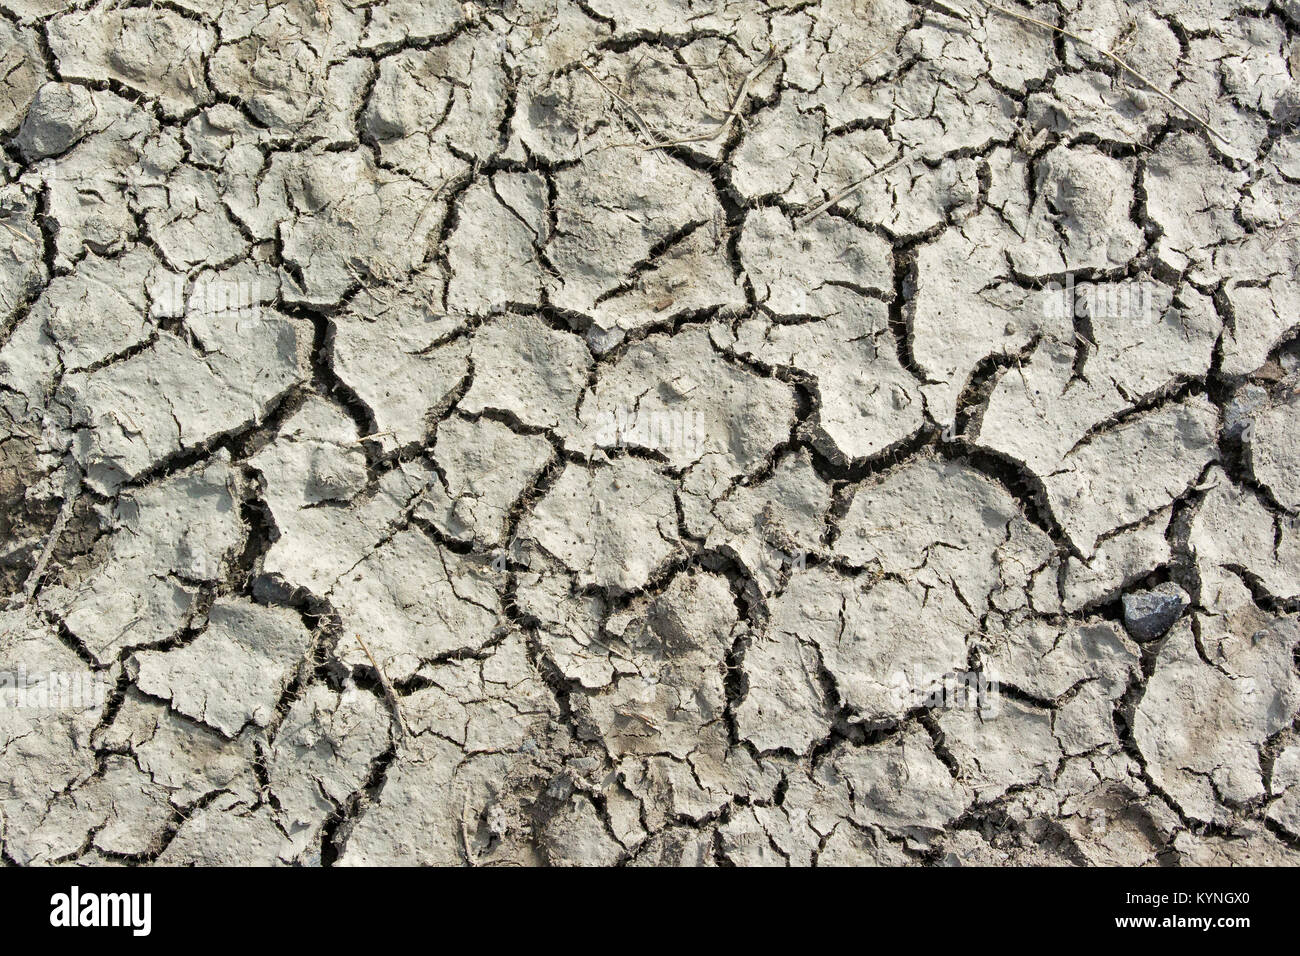 Dry ground begining to crack due to lack of rain. UK Stock Photo